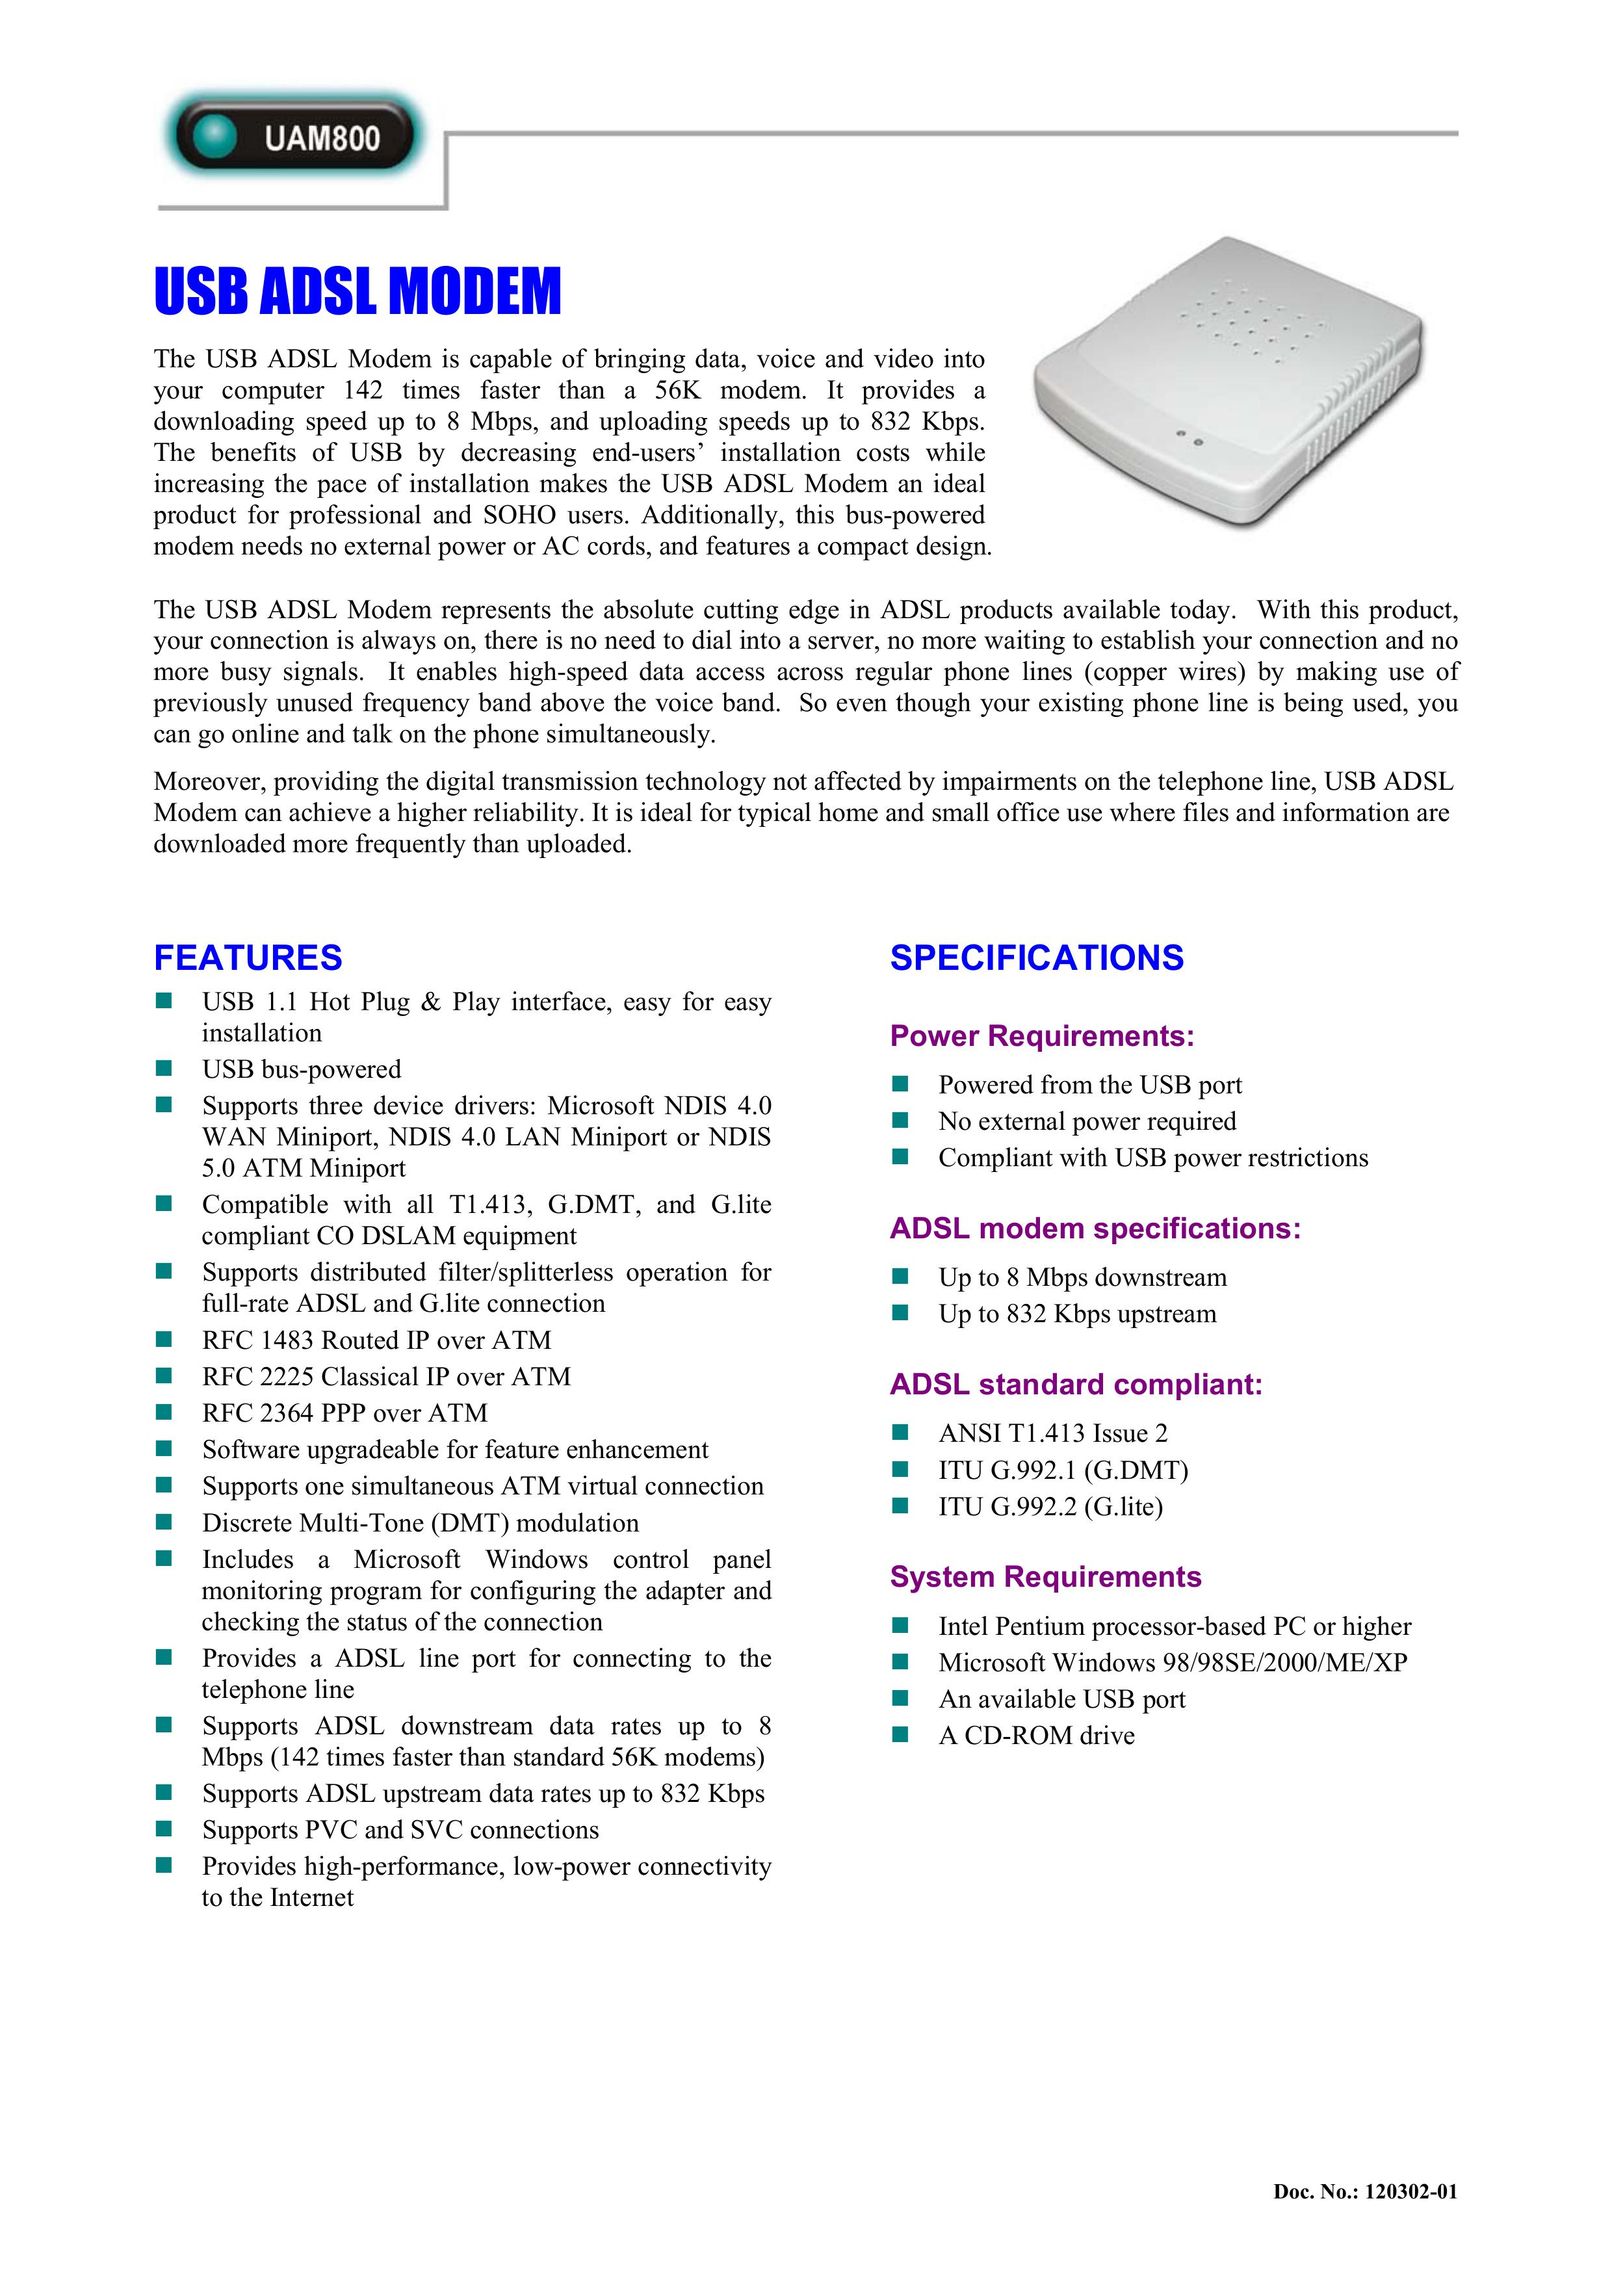 Abocom UAM800 Network Router User Manual